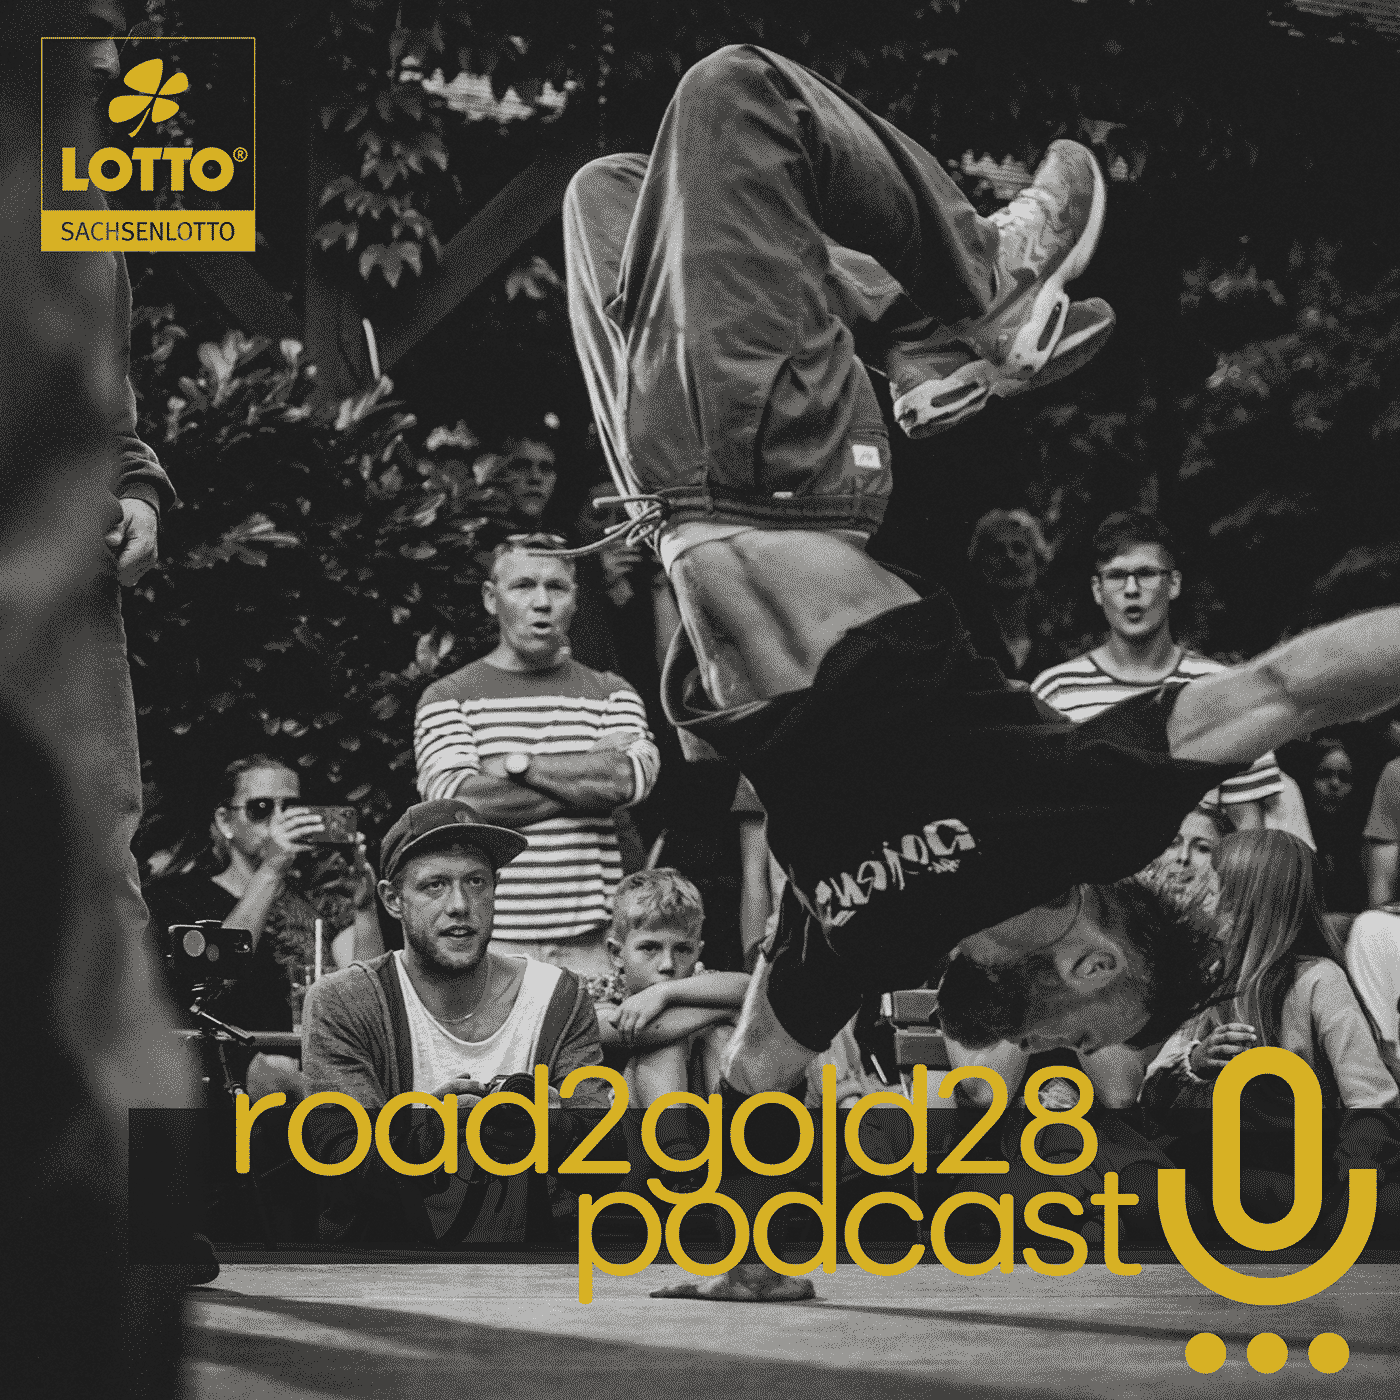 Sachsenlotto ROAD 2 GOLD Podcast | The Saxonz, Joanna Mintcheva und Felix Roßberg